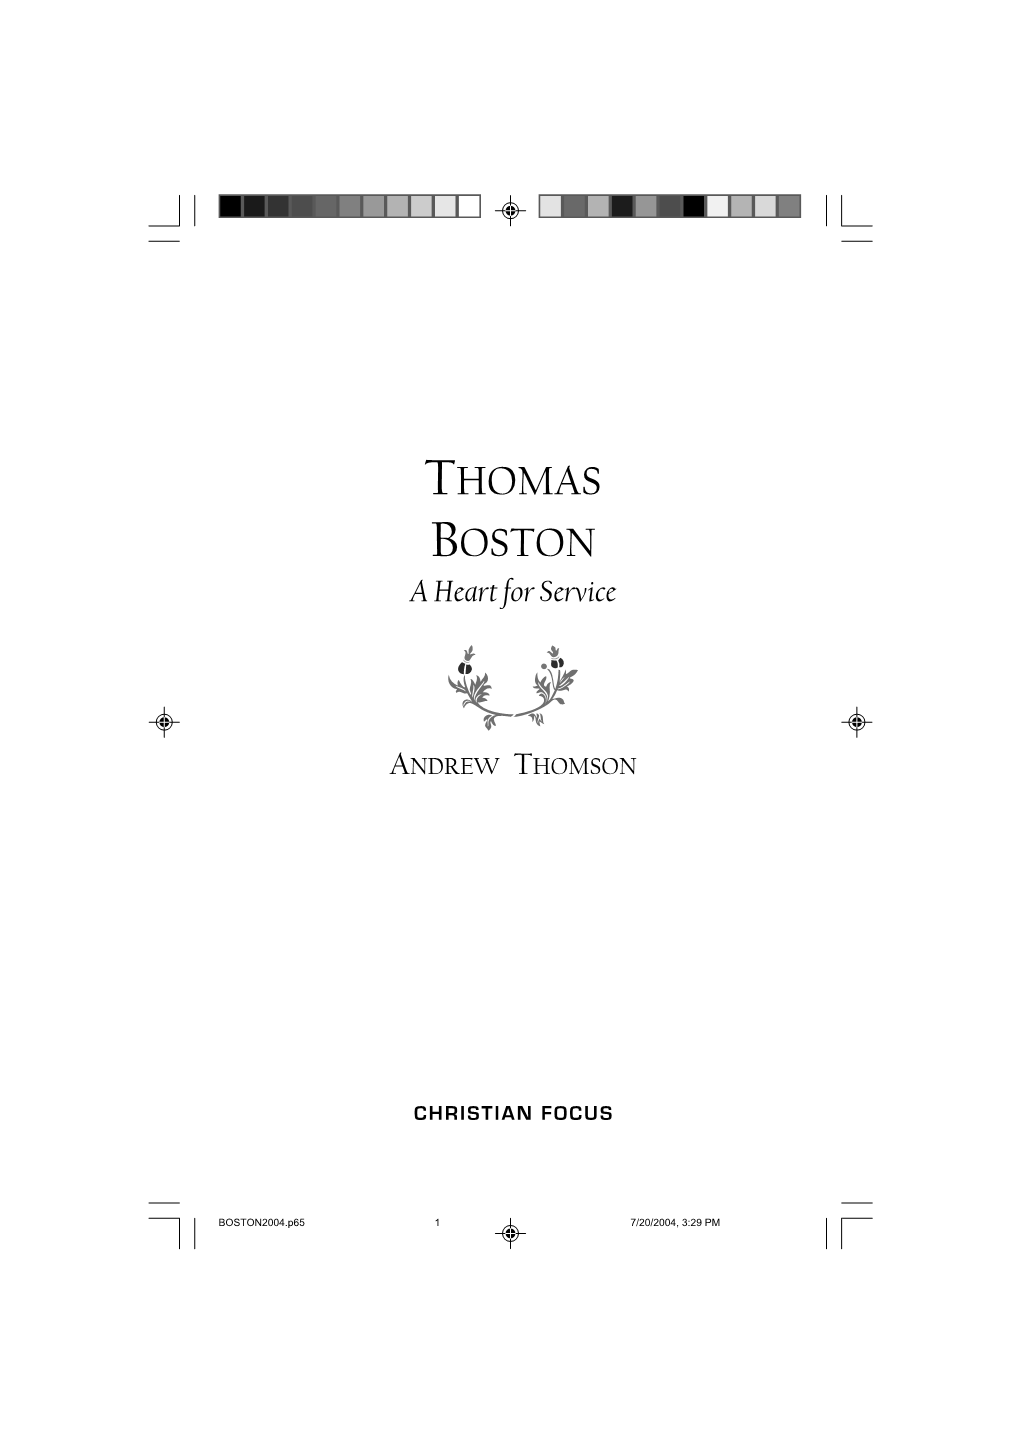 THOMAS BOSTON a Heart for Service